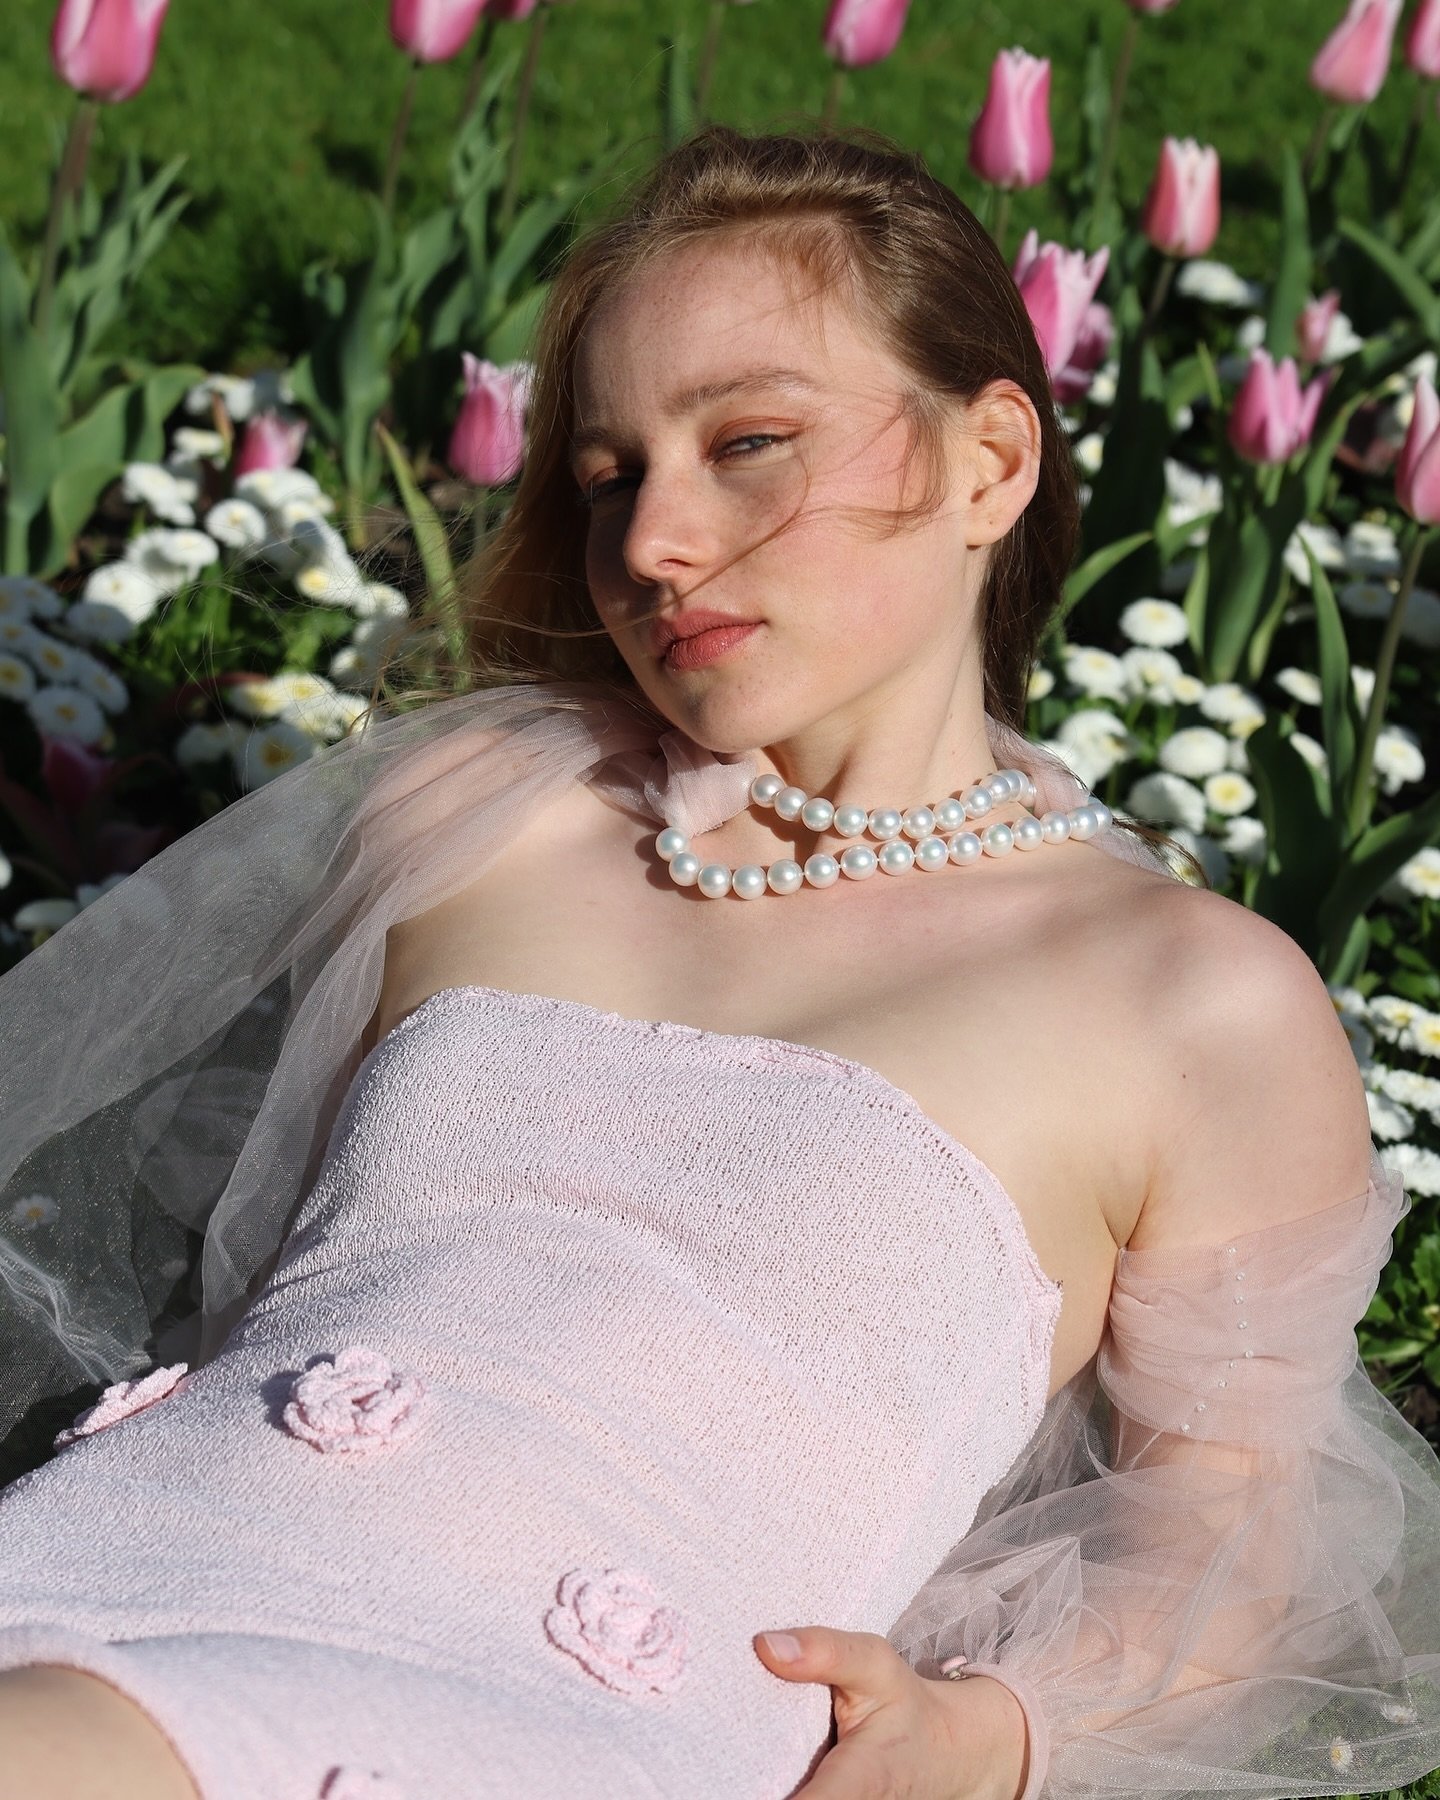 Elegance in every pearl, a timeless embrace. 🌷

#pearls#springvibe#swisshandmade#jewellery#springtrend